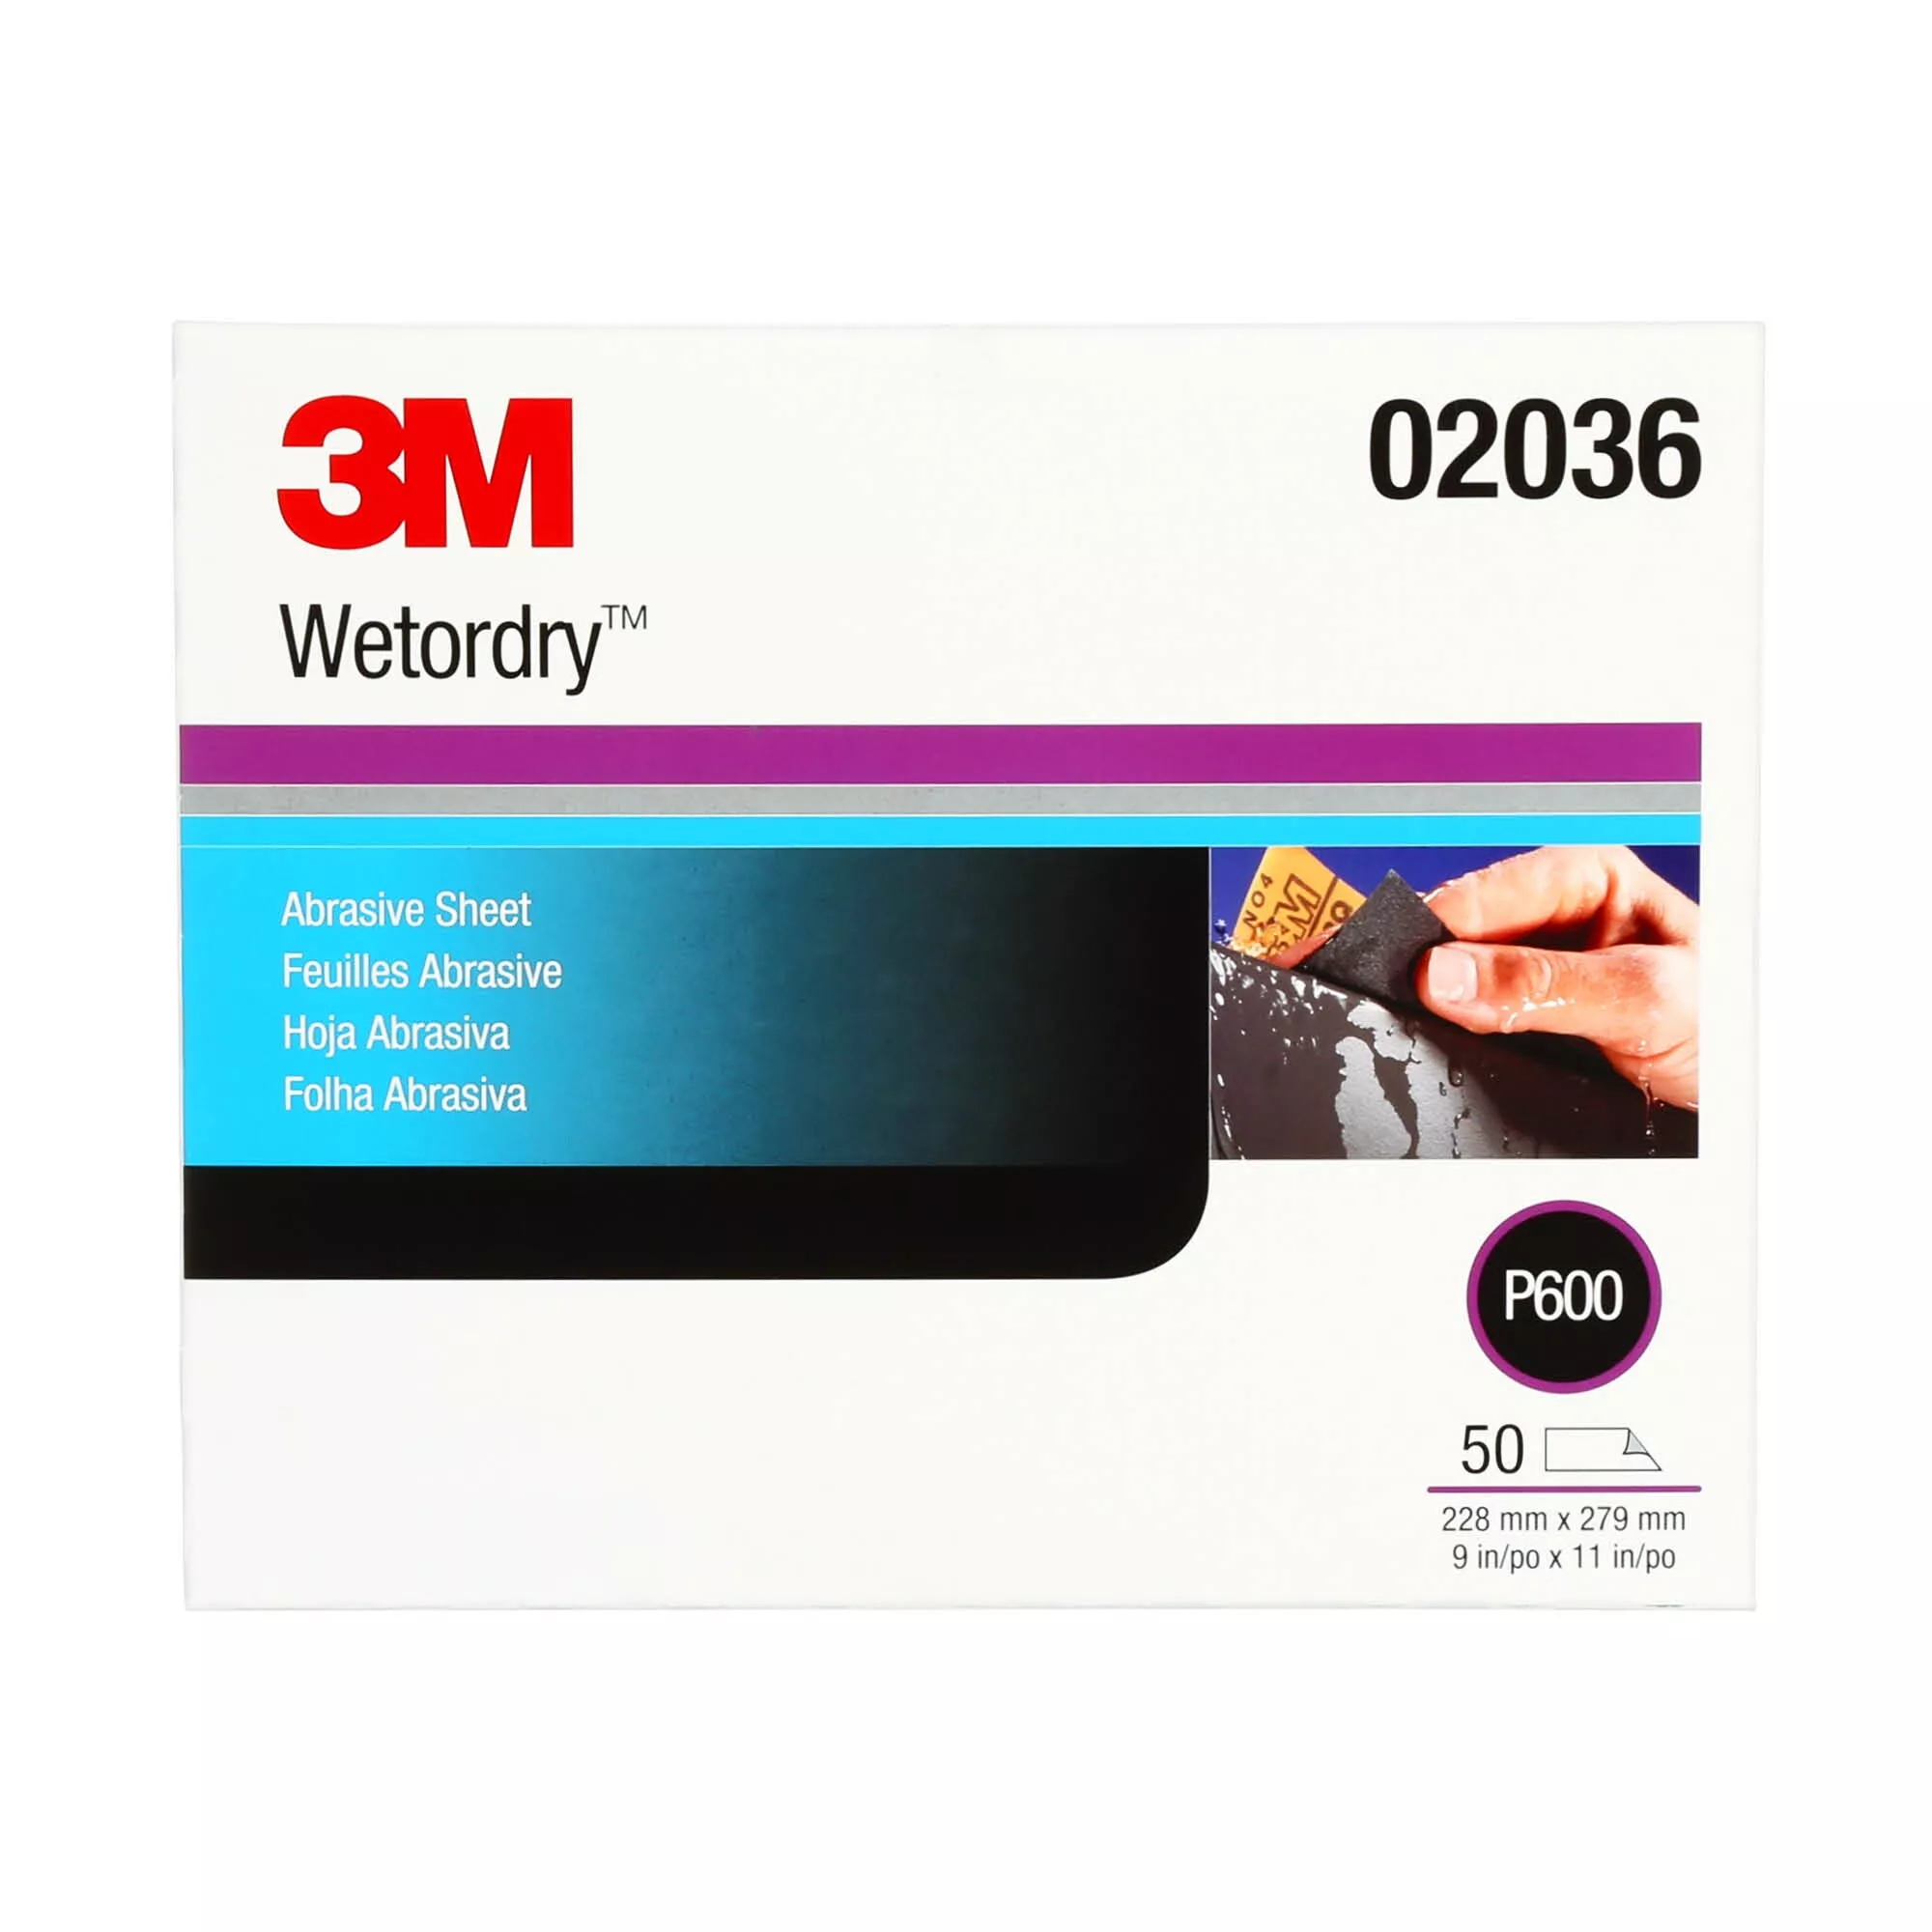 SKU 7000028325 | 3M™ Wetordry™ Abrasive Sheet 213Q